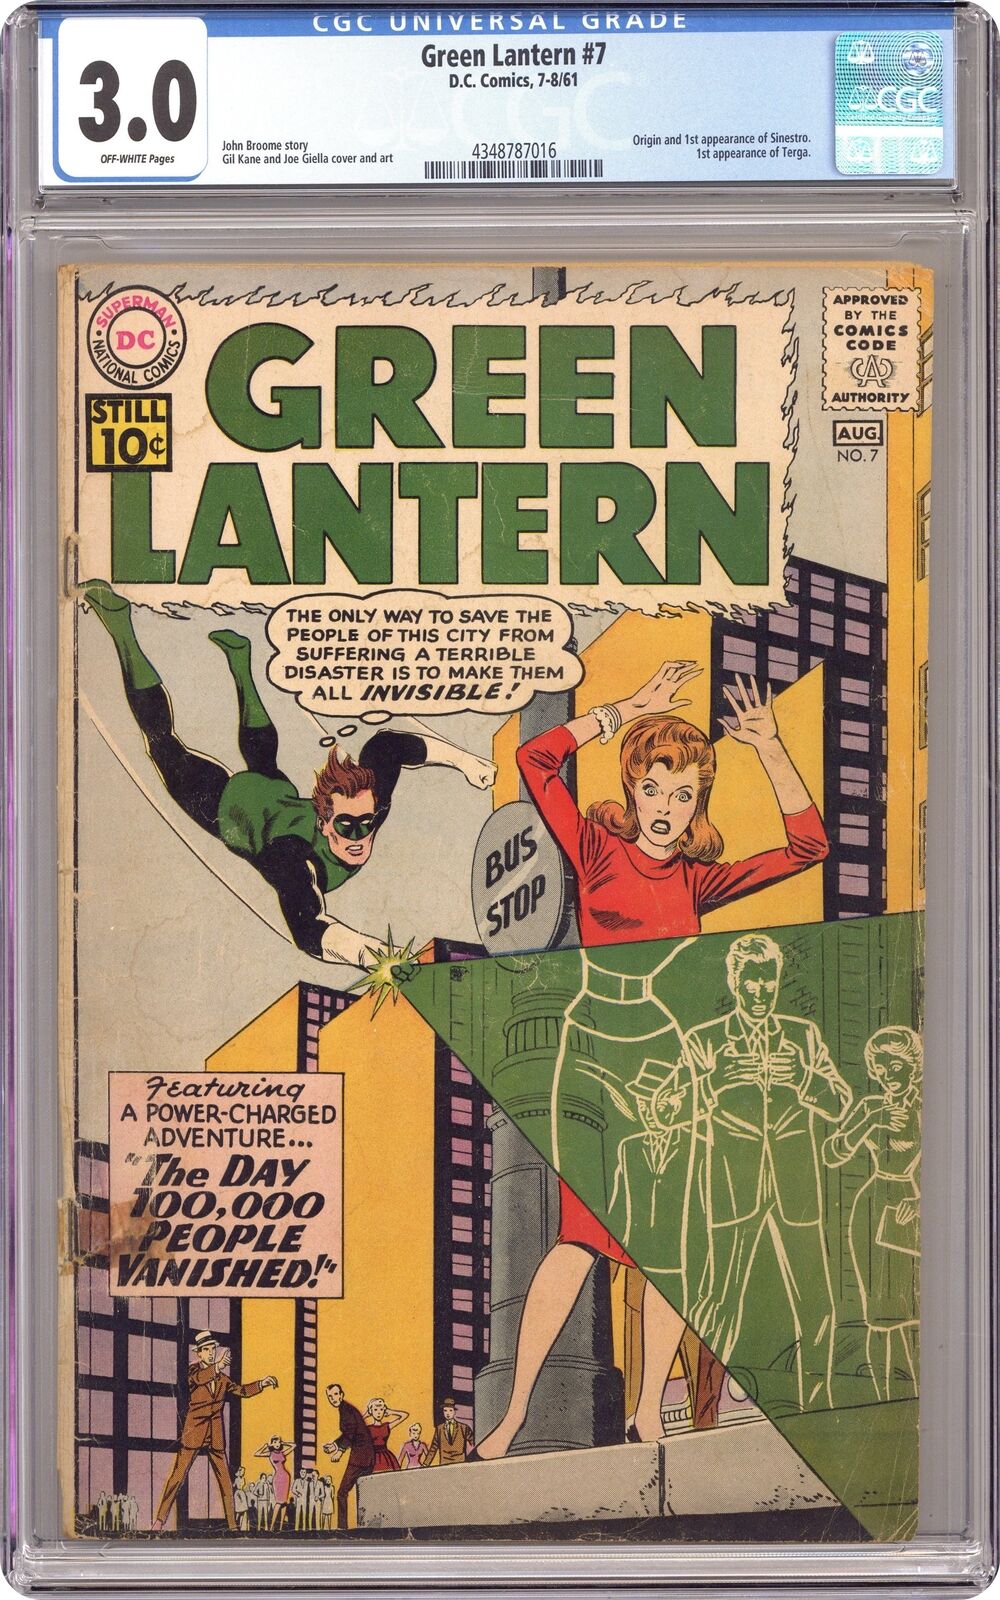 Green Lantern #7 CGC 3.0 1961 4348787016 1st app. and origin Sinestro